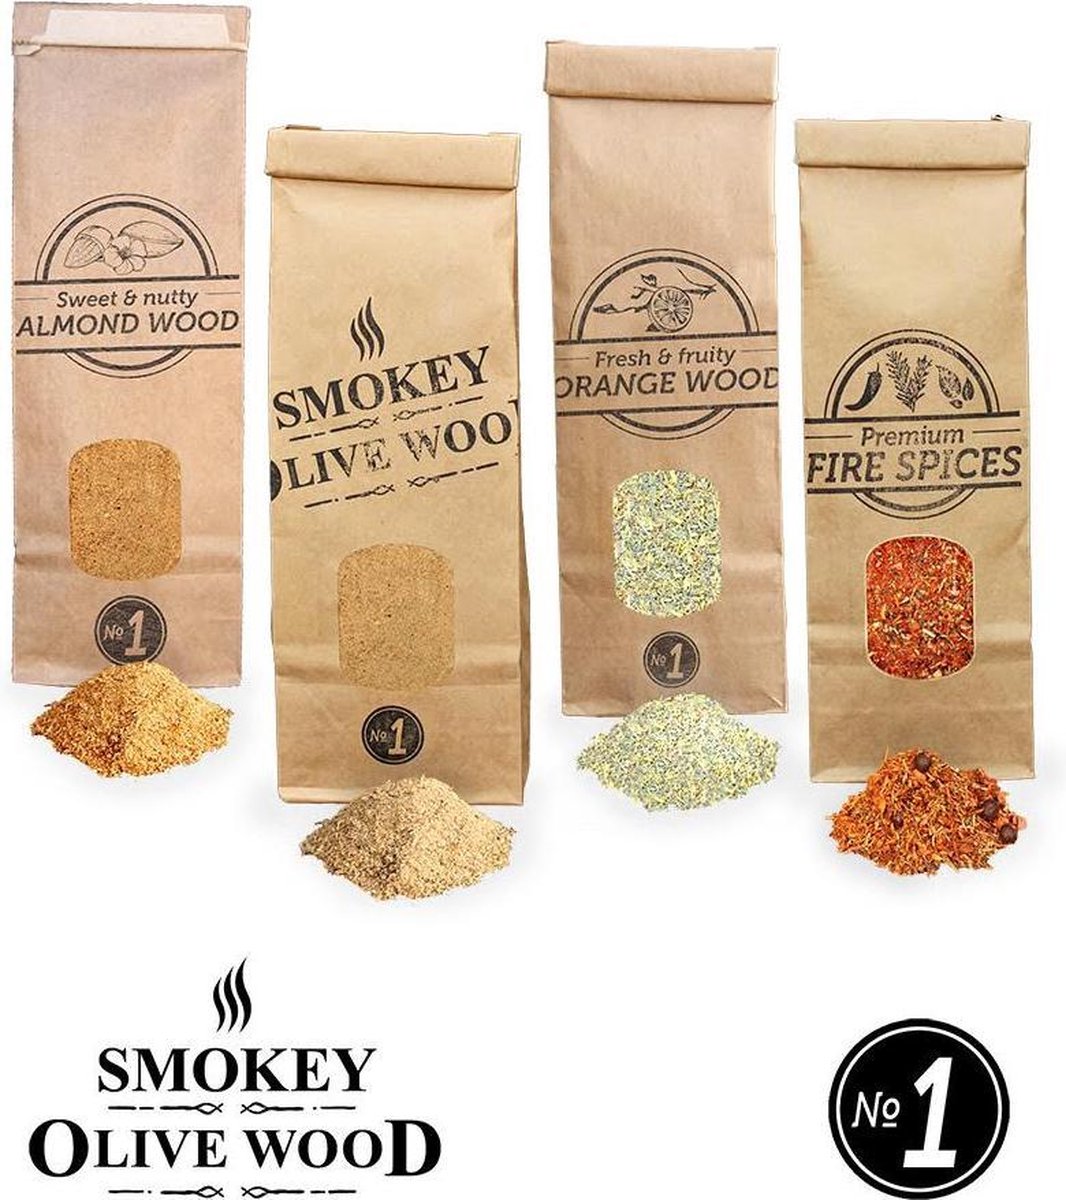 Smokey Olive Wood - Rookmot - Selectie en vuurkruiden - Olijf/Beuk - Amandel - Sinaasappel en vuurkruiden - 4 X 300ml - Smokey Olive Wood